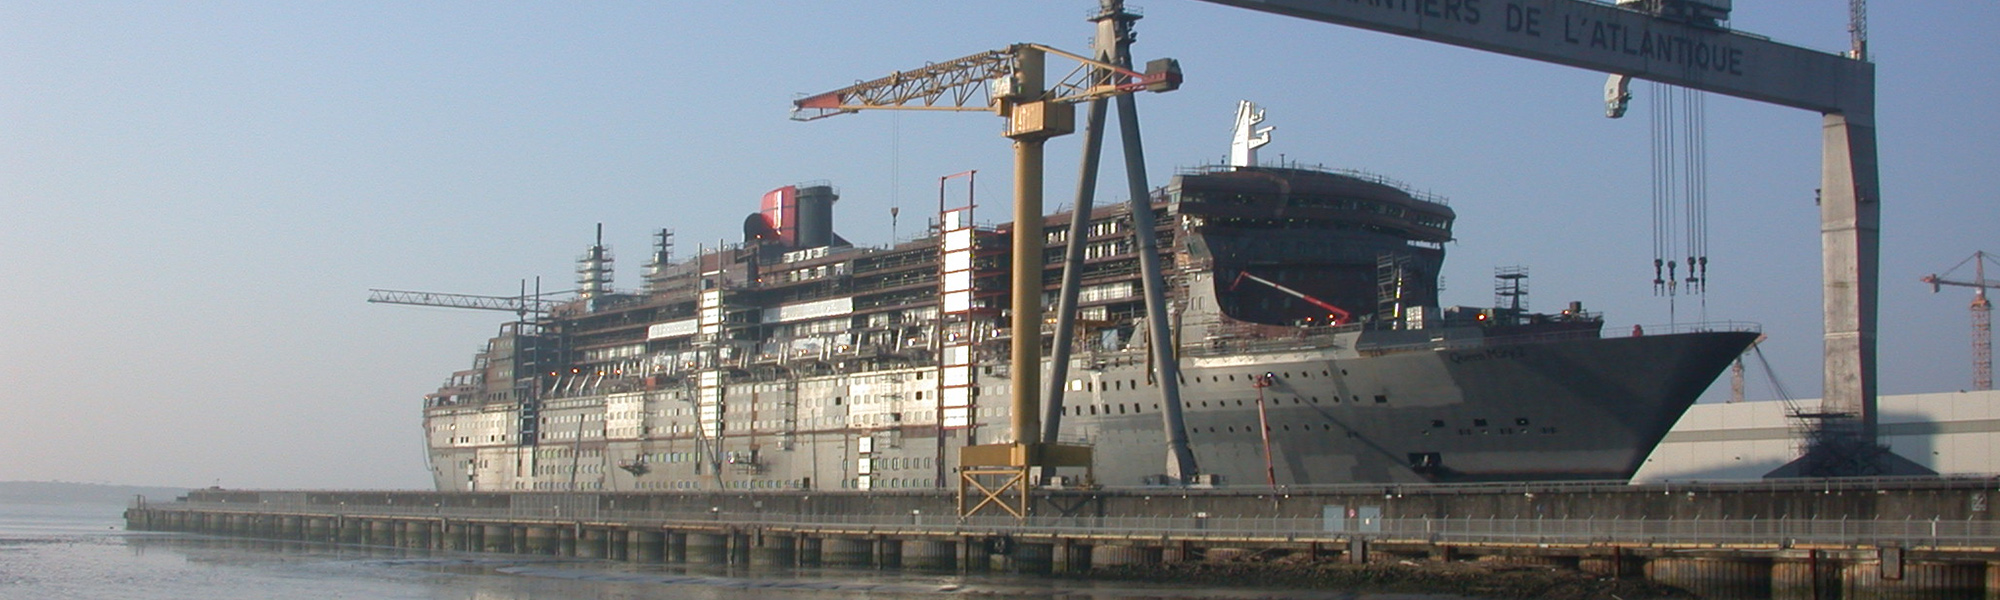 Maritime Construction